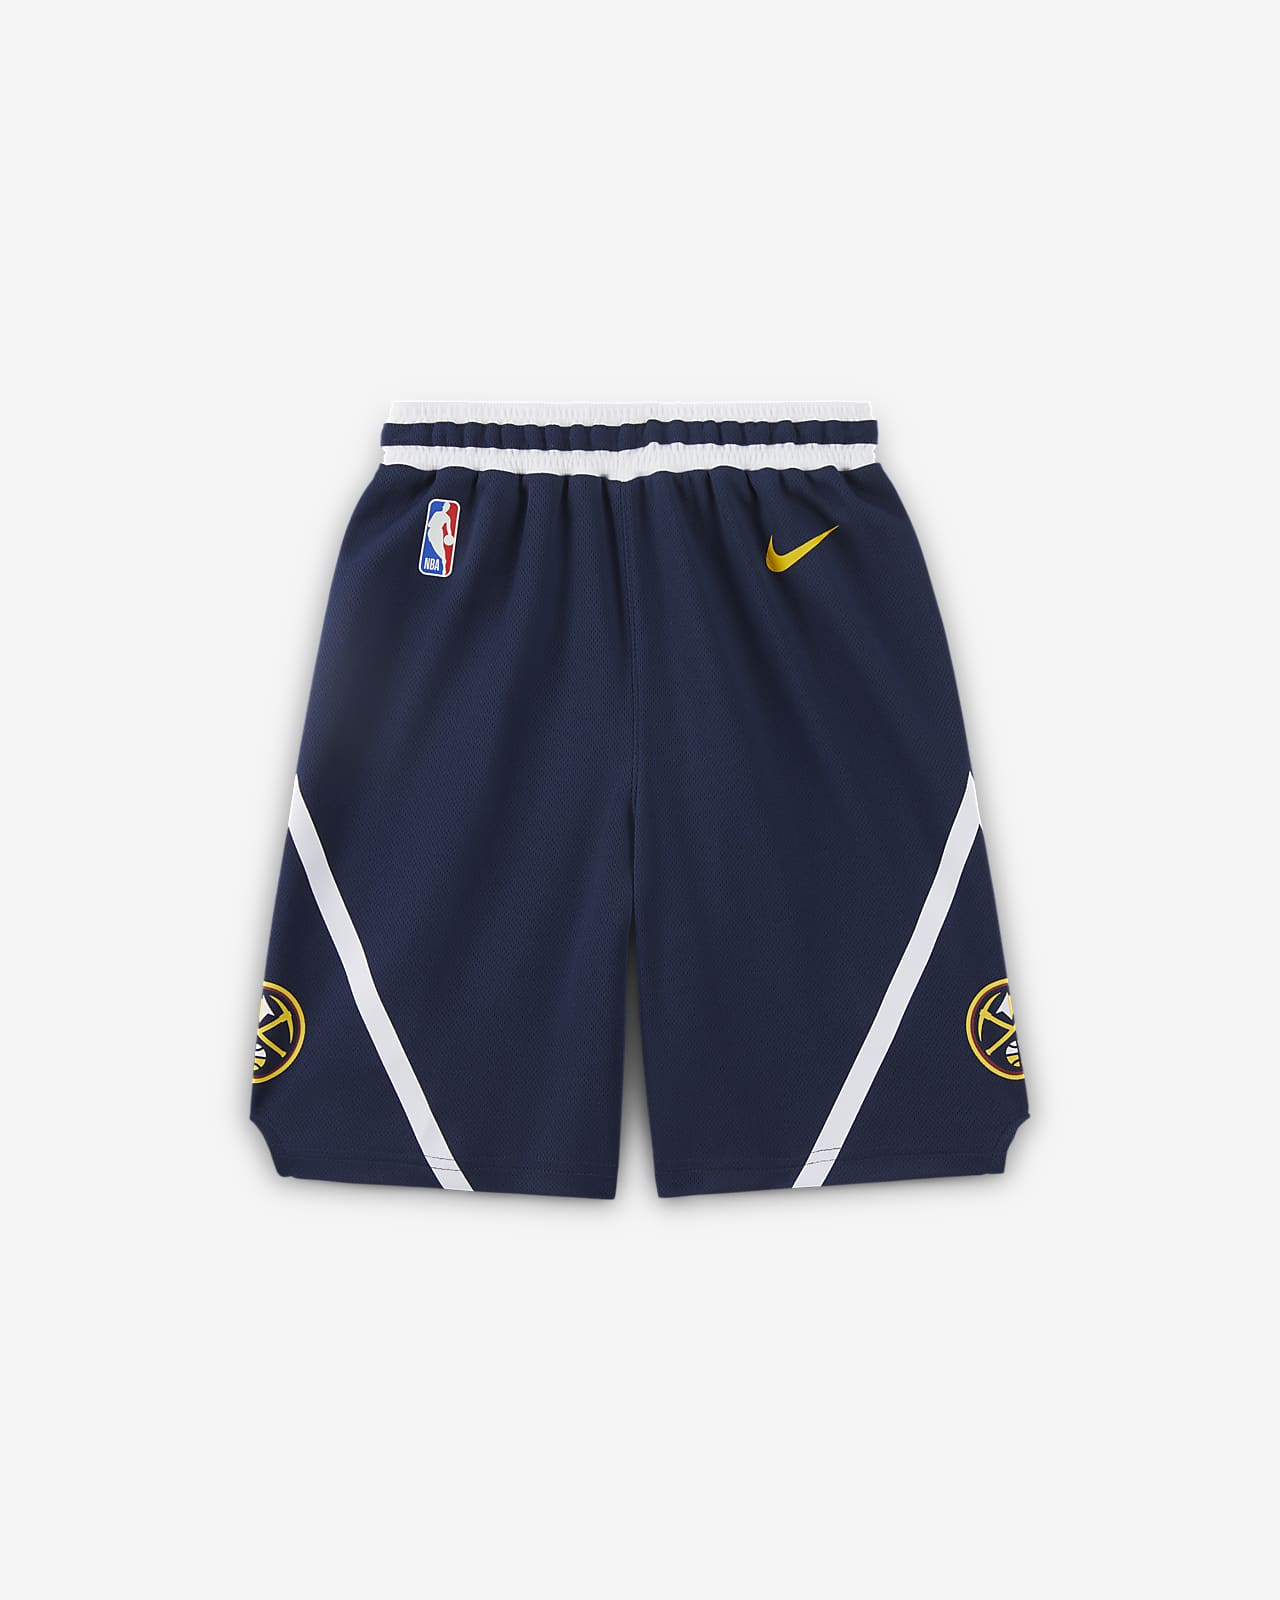 丹佛掘金队 Icon Edition Nike NBA 幼童短裤